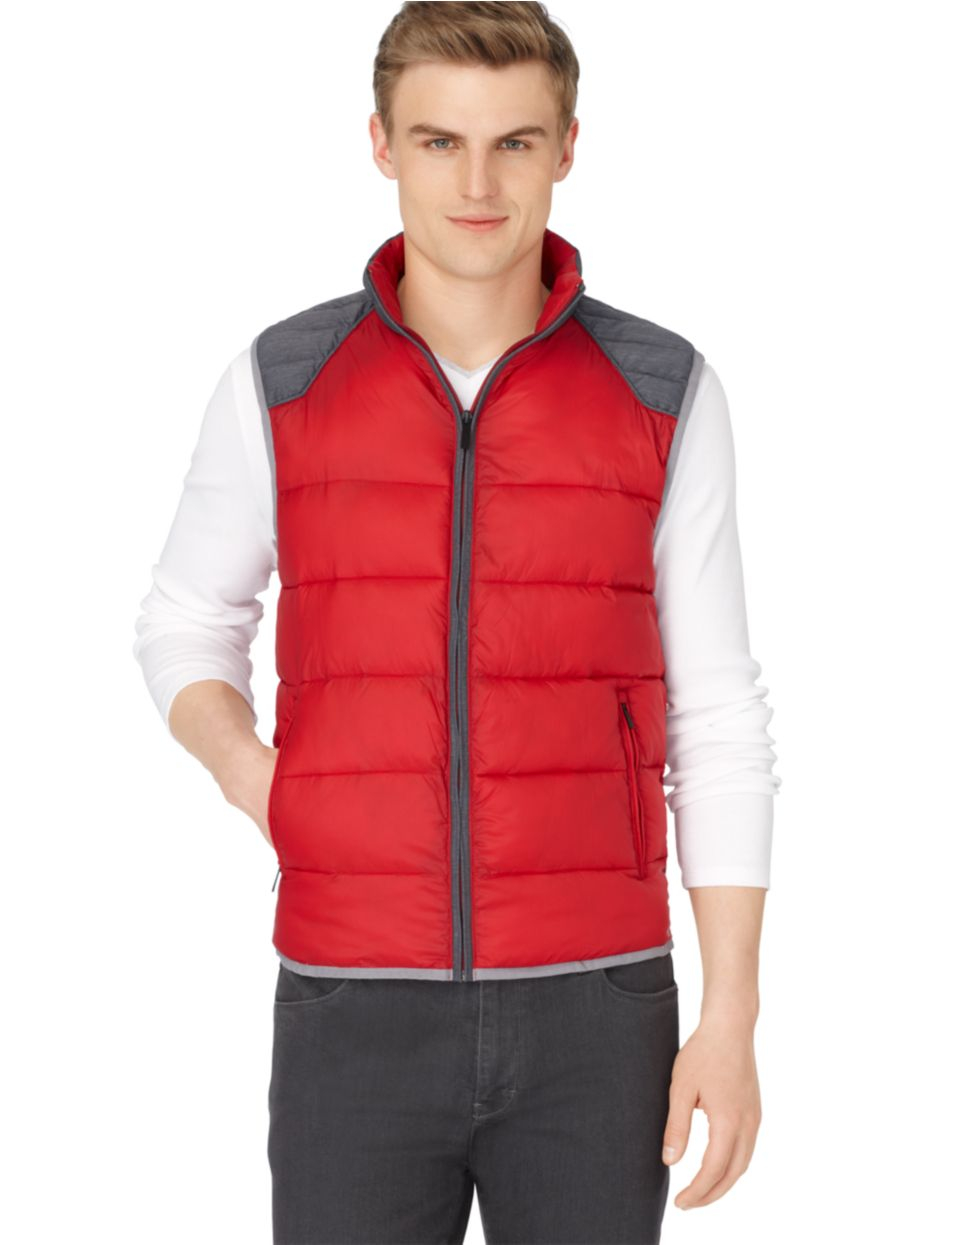 Calvin Klein Colorblock Puffer Vest in Red for Men - Lyst